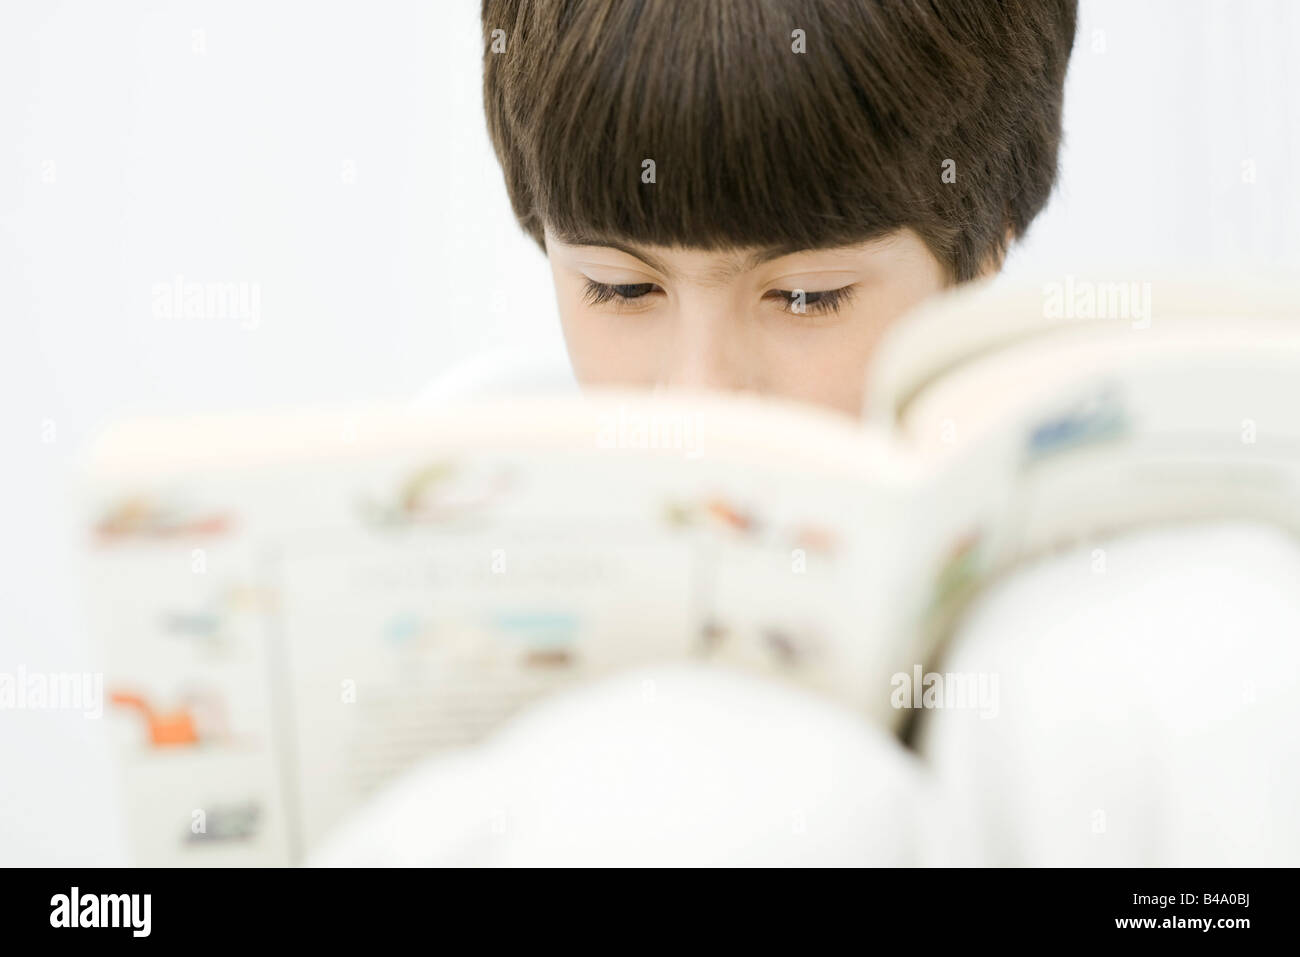 Boy reading book, close-up Stock Photo